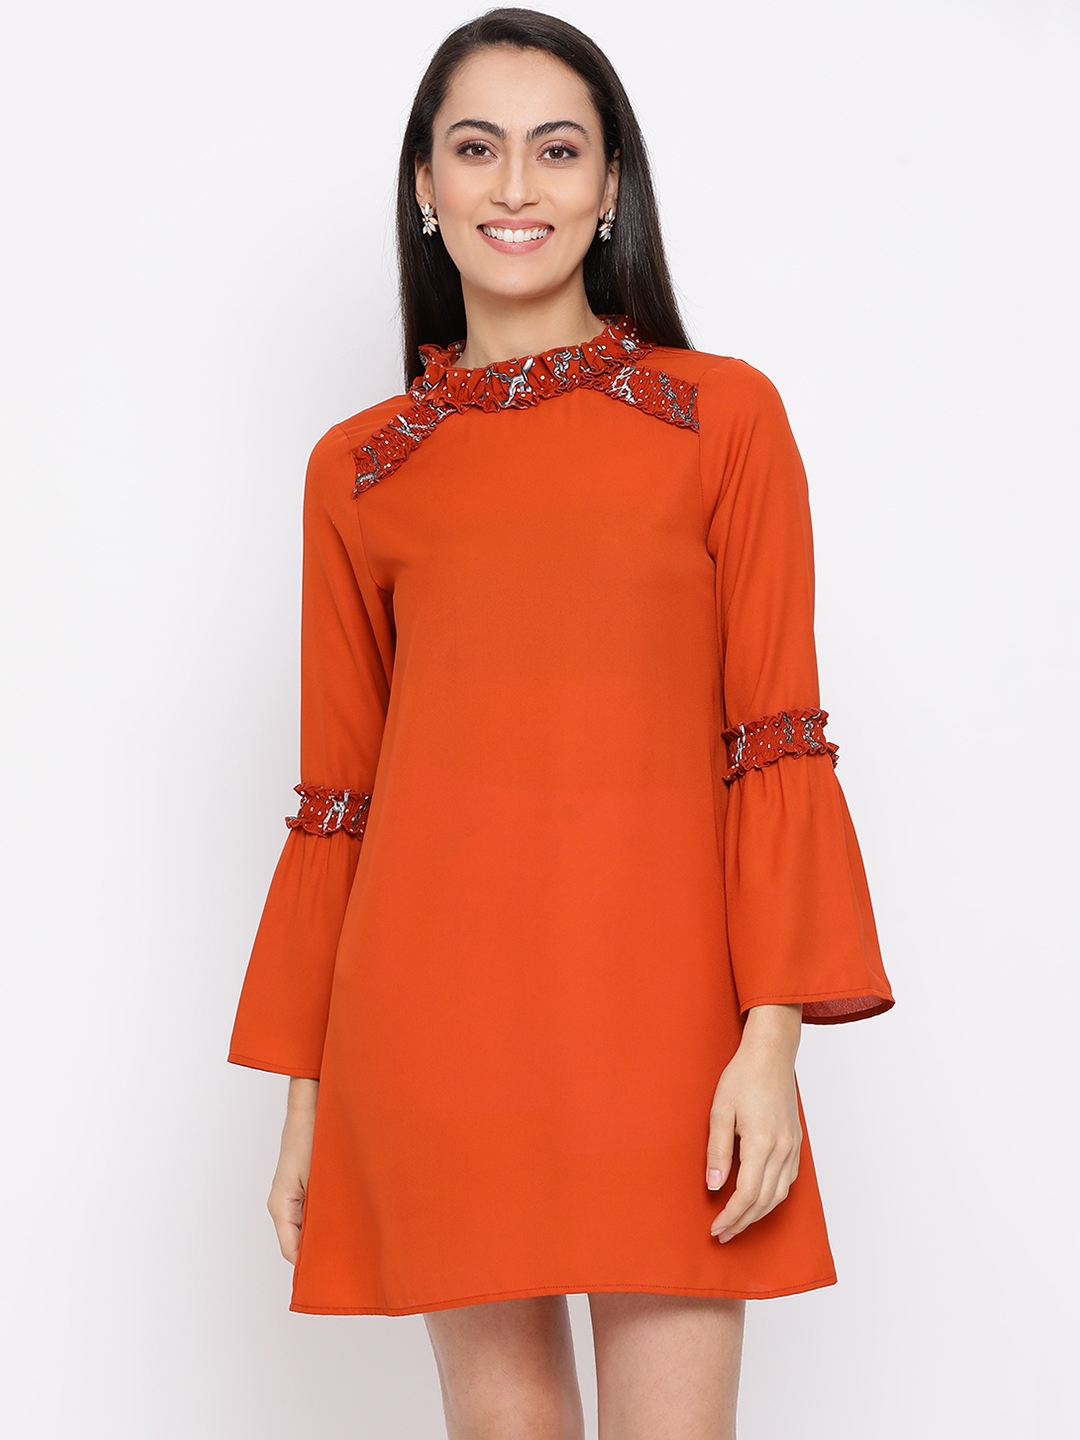 DRAAX fashions | Draax Fashions Orange A-Line Dress